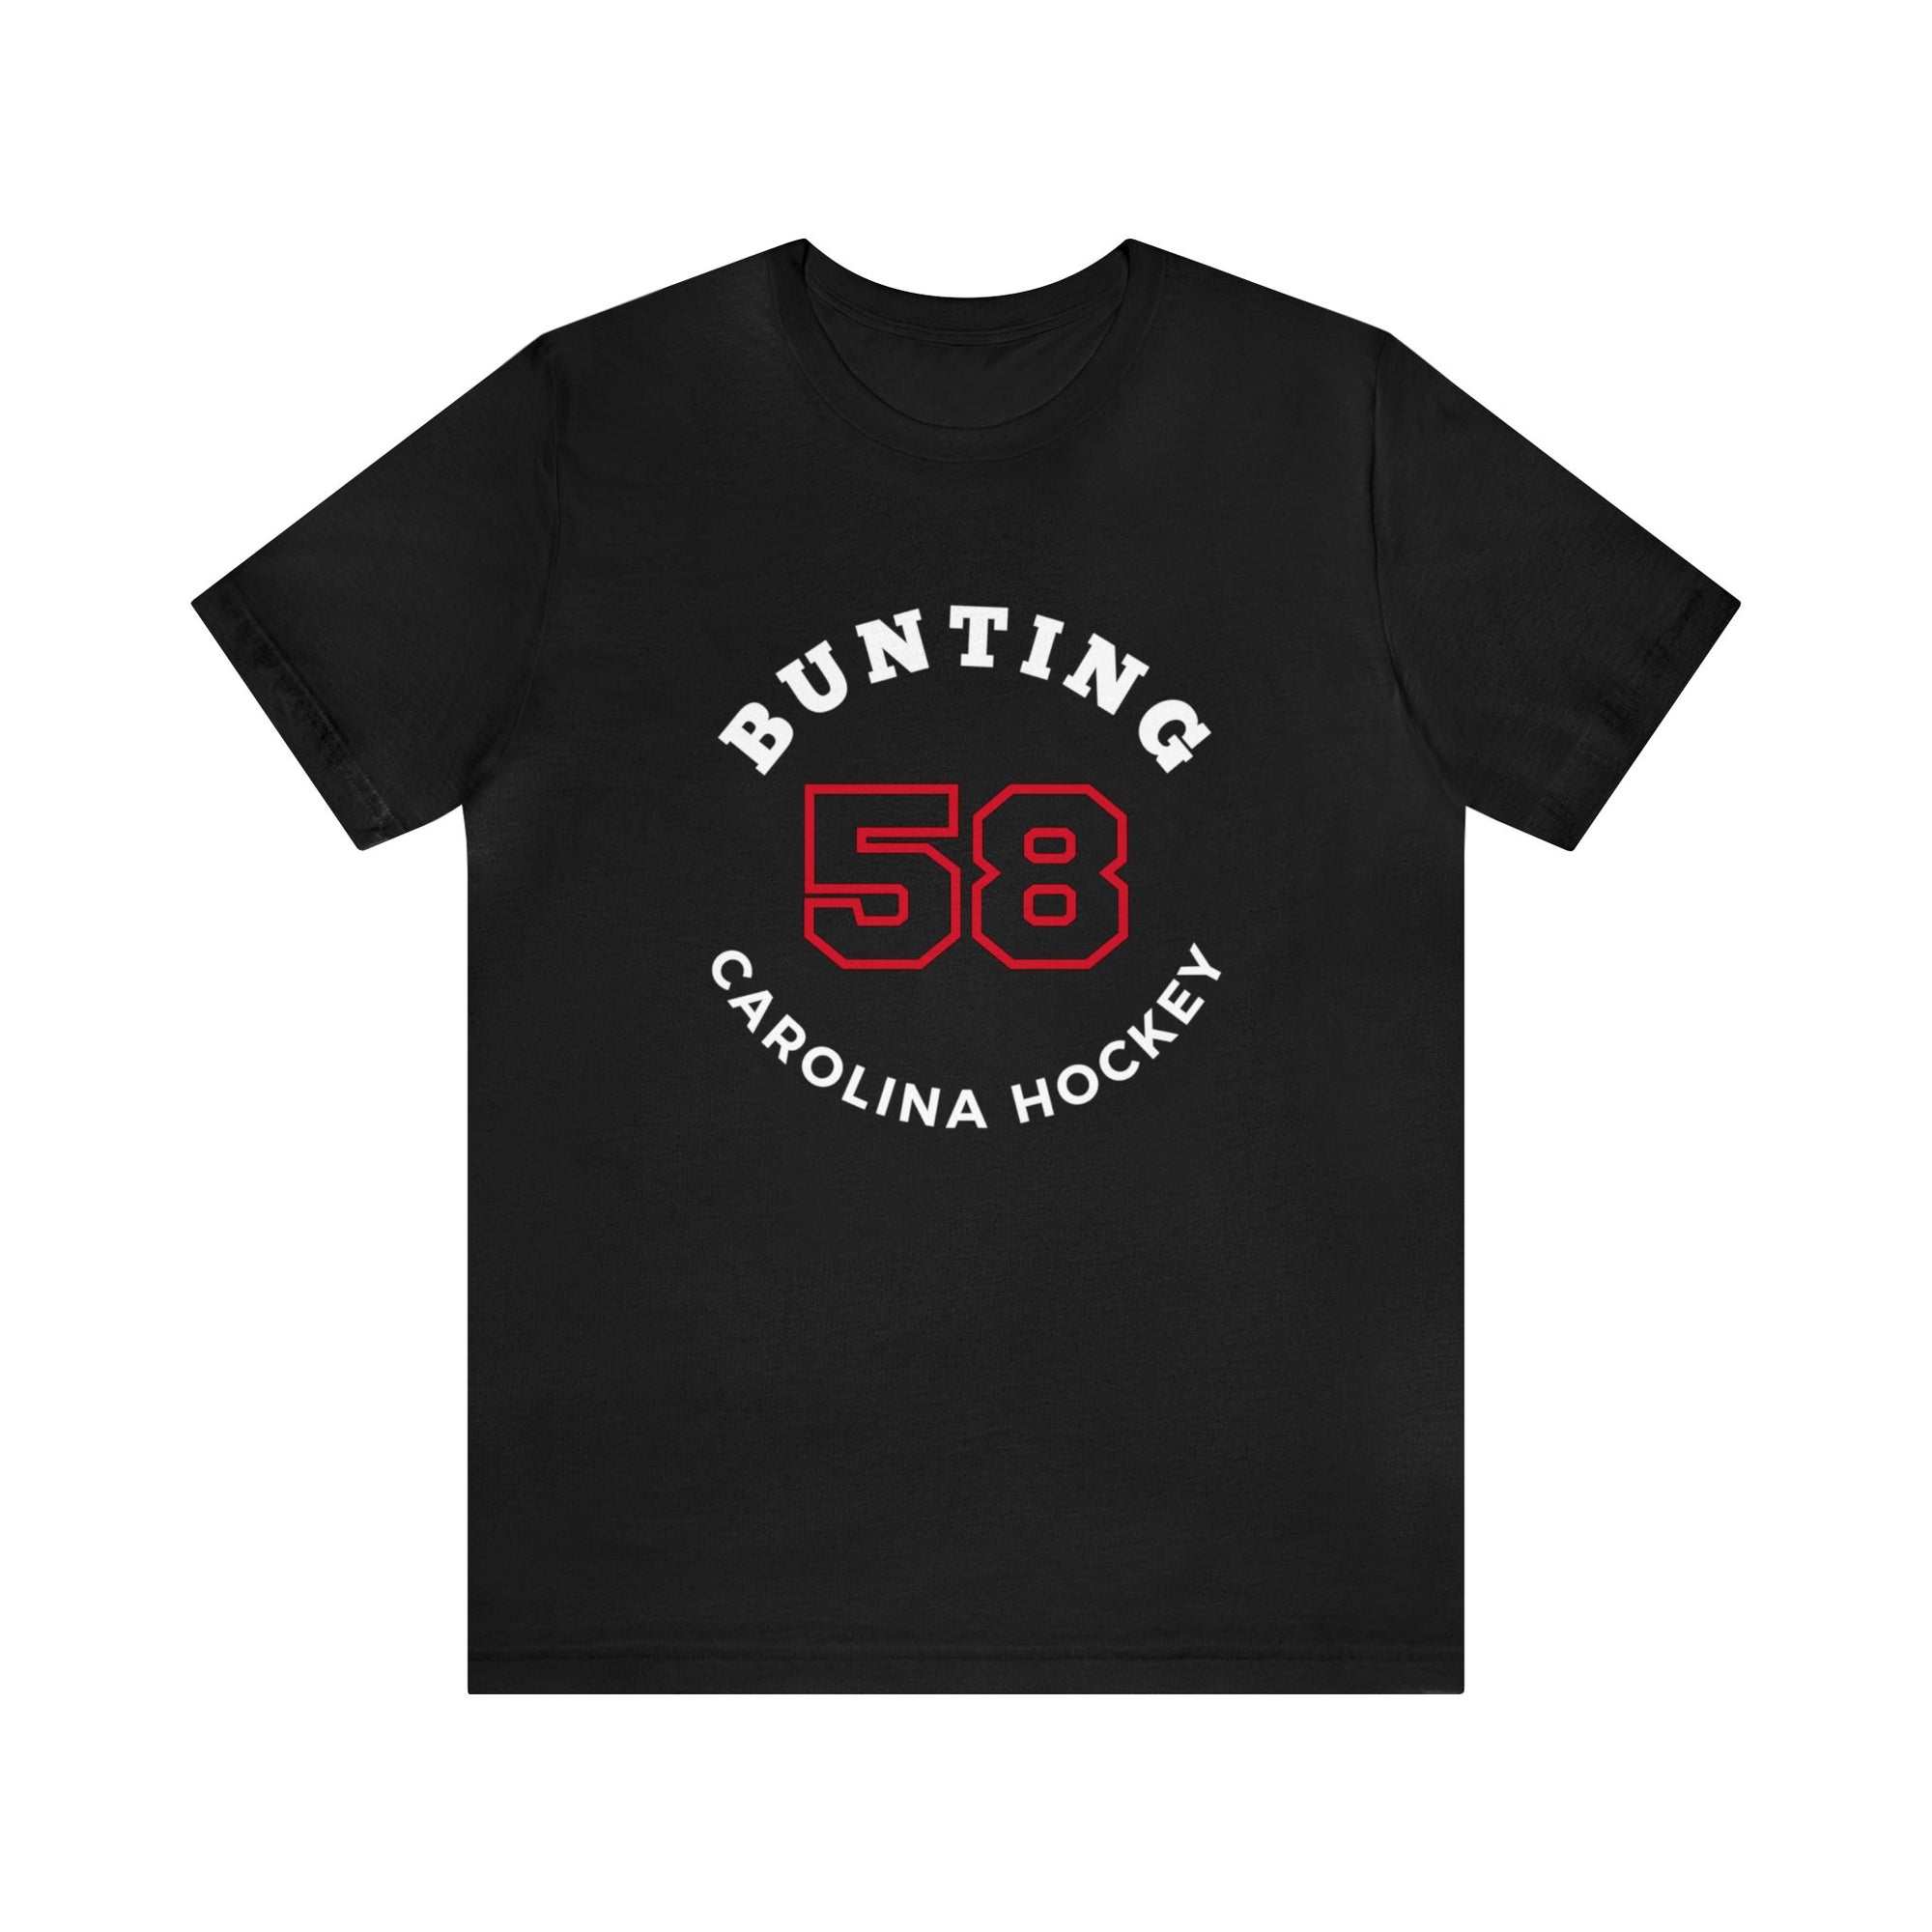 Bunting 58 Carolina Hockey Number Arch Design Unisex T-Shirt